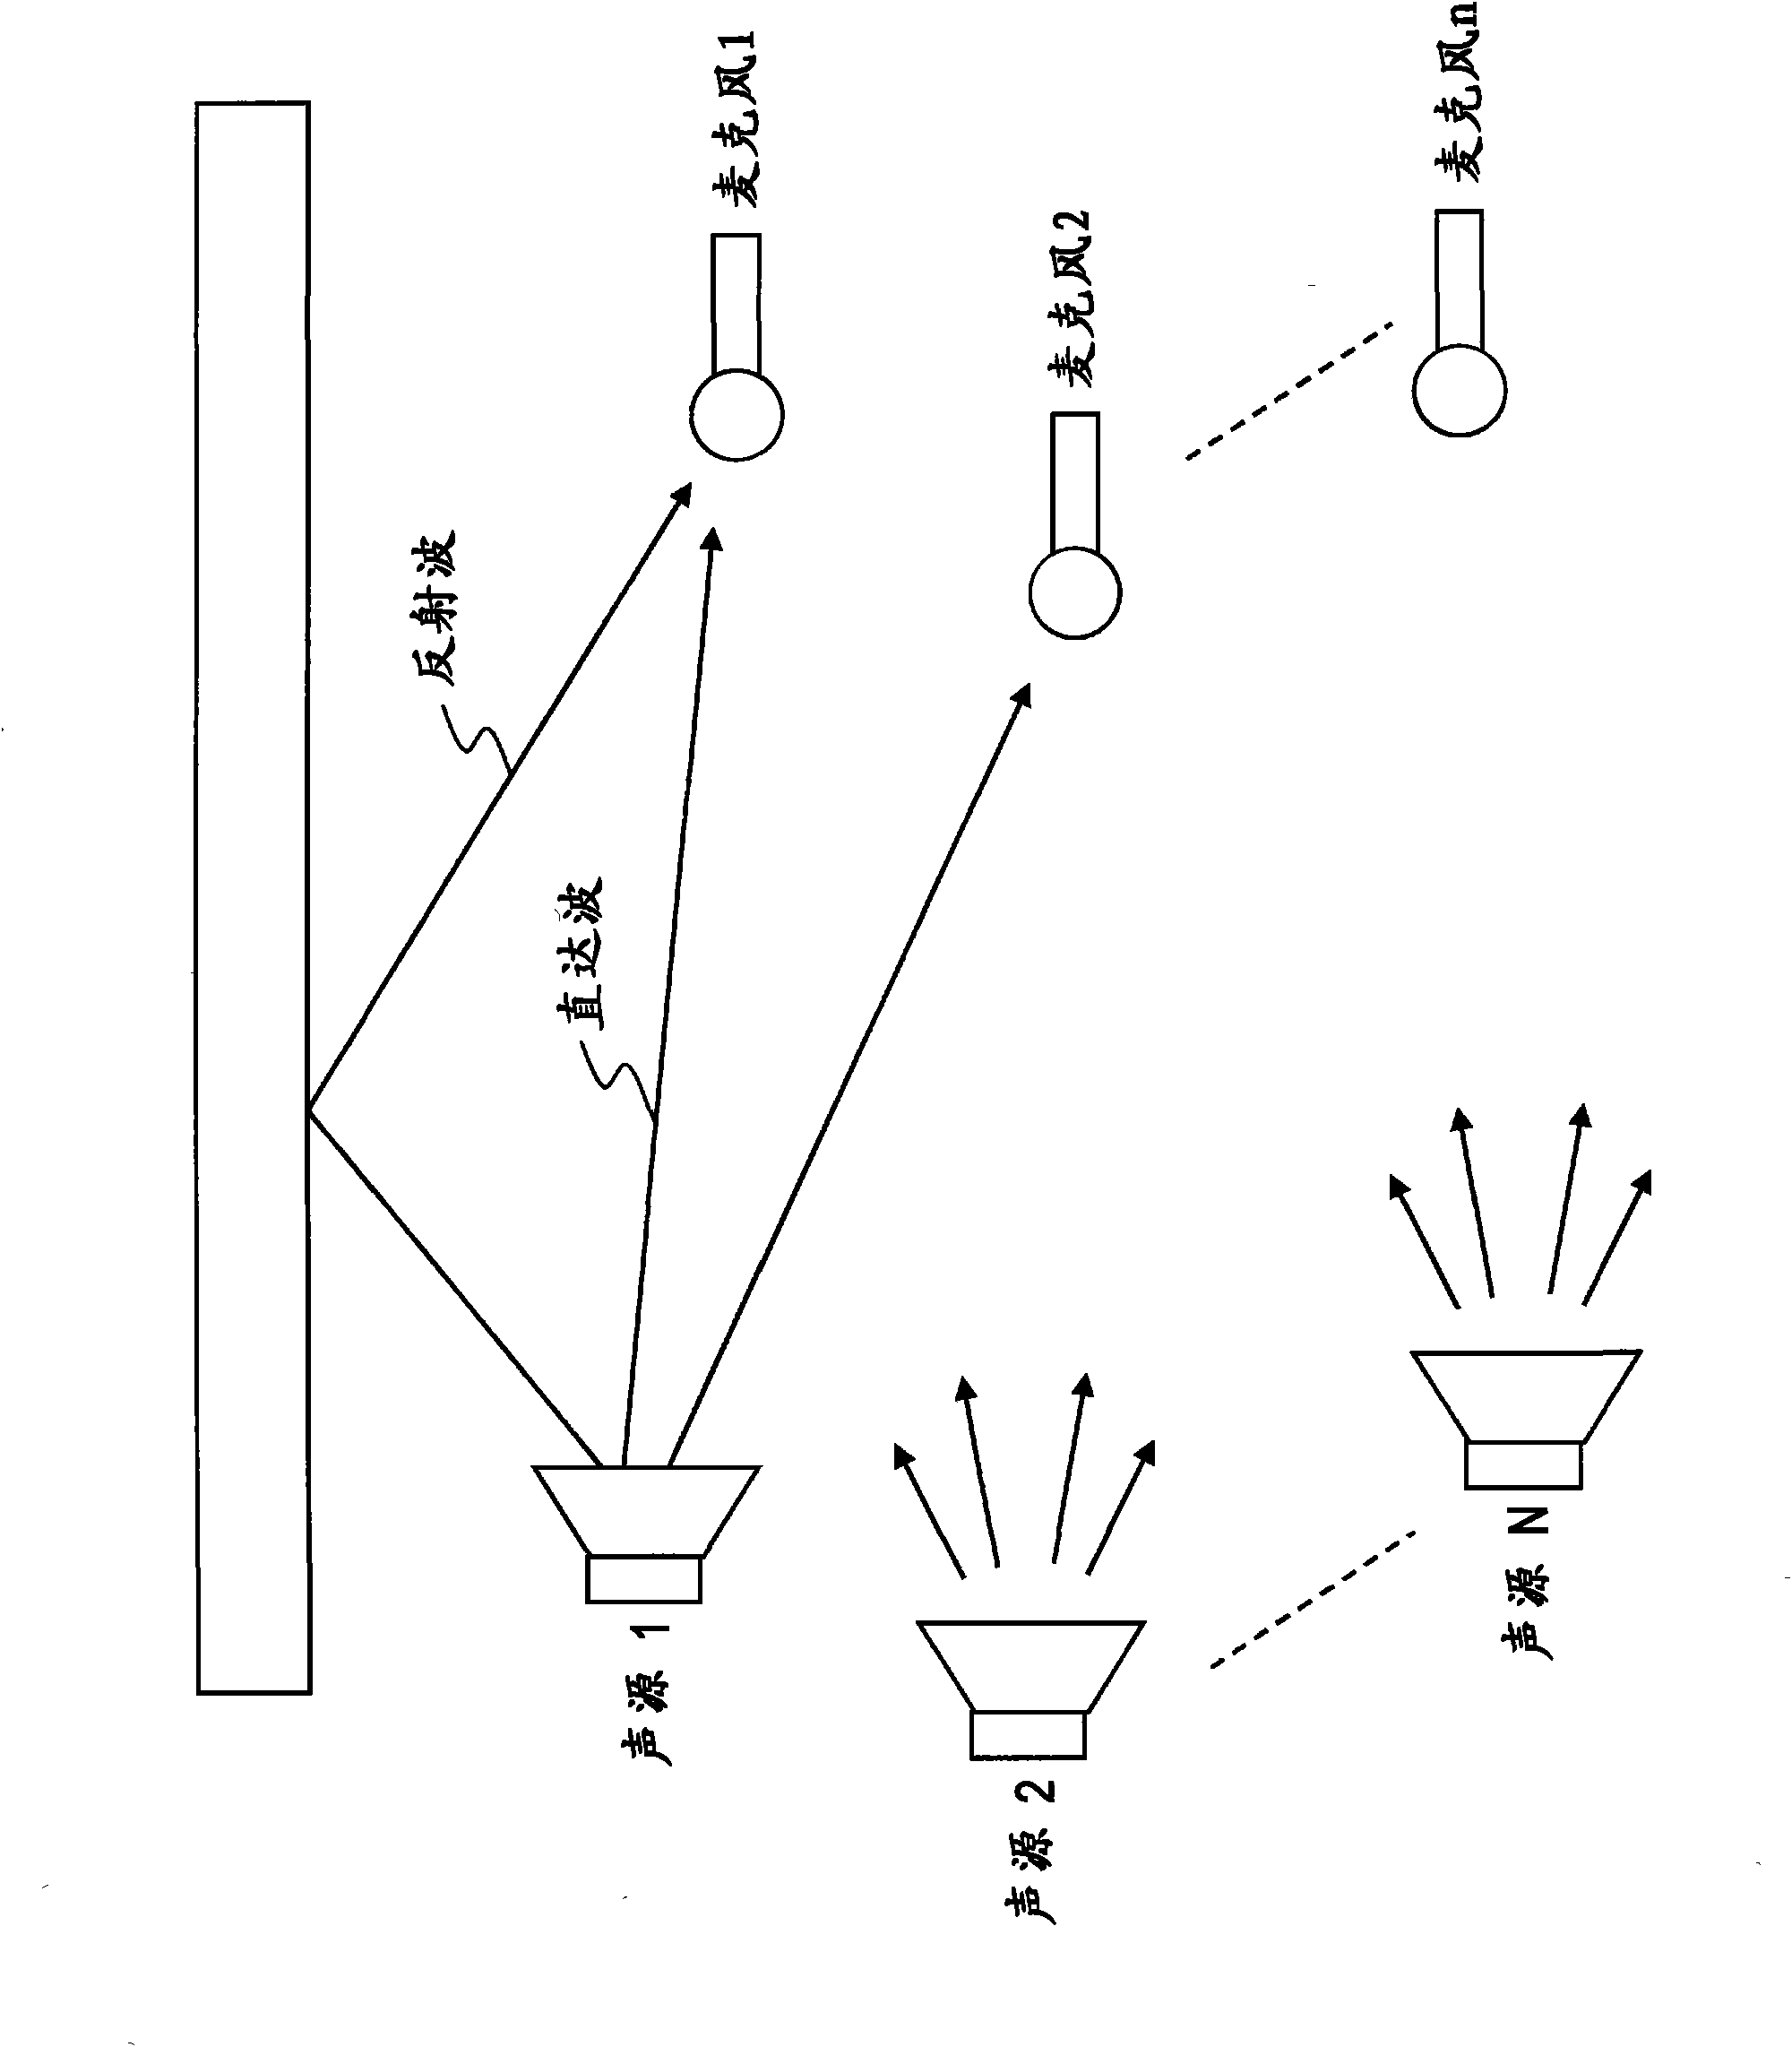 Signal processing apparatus, signal processing method, and program